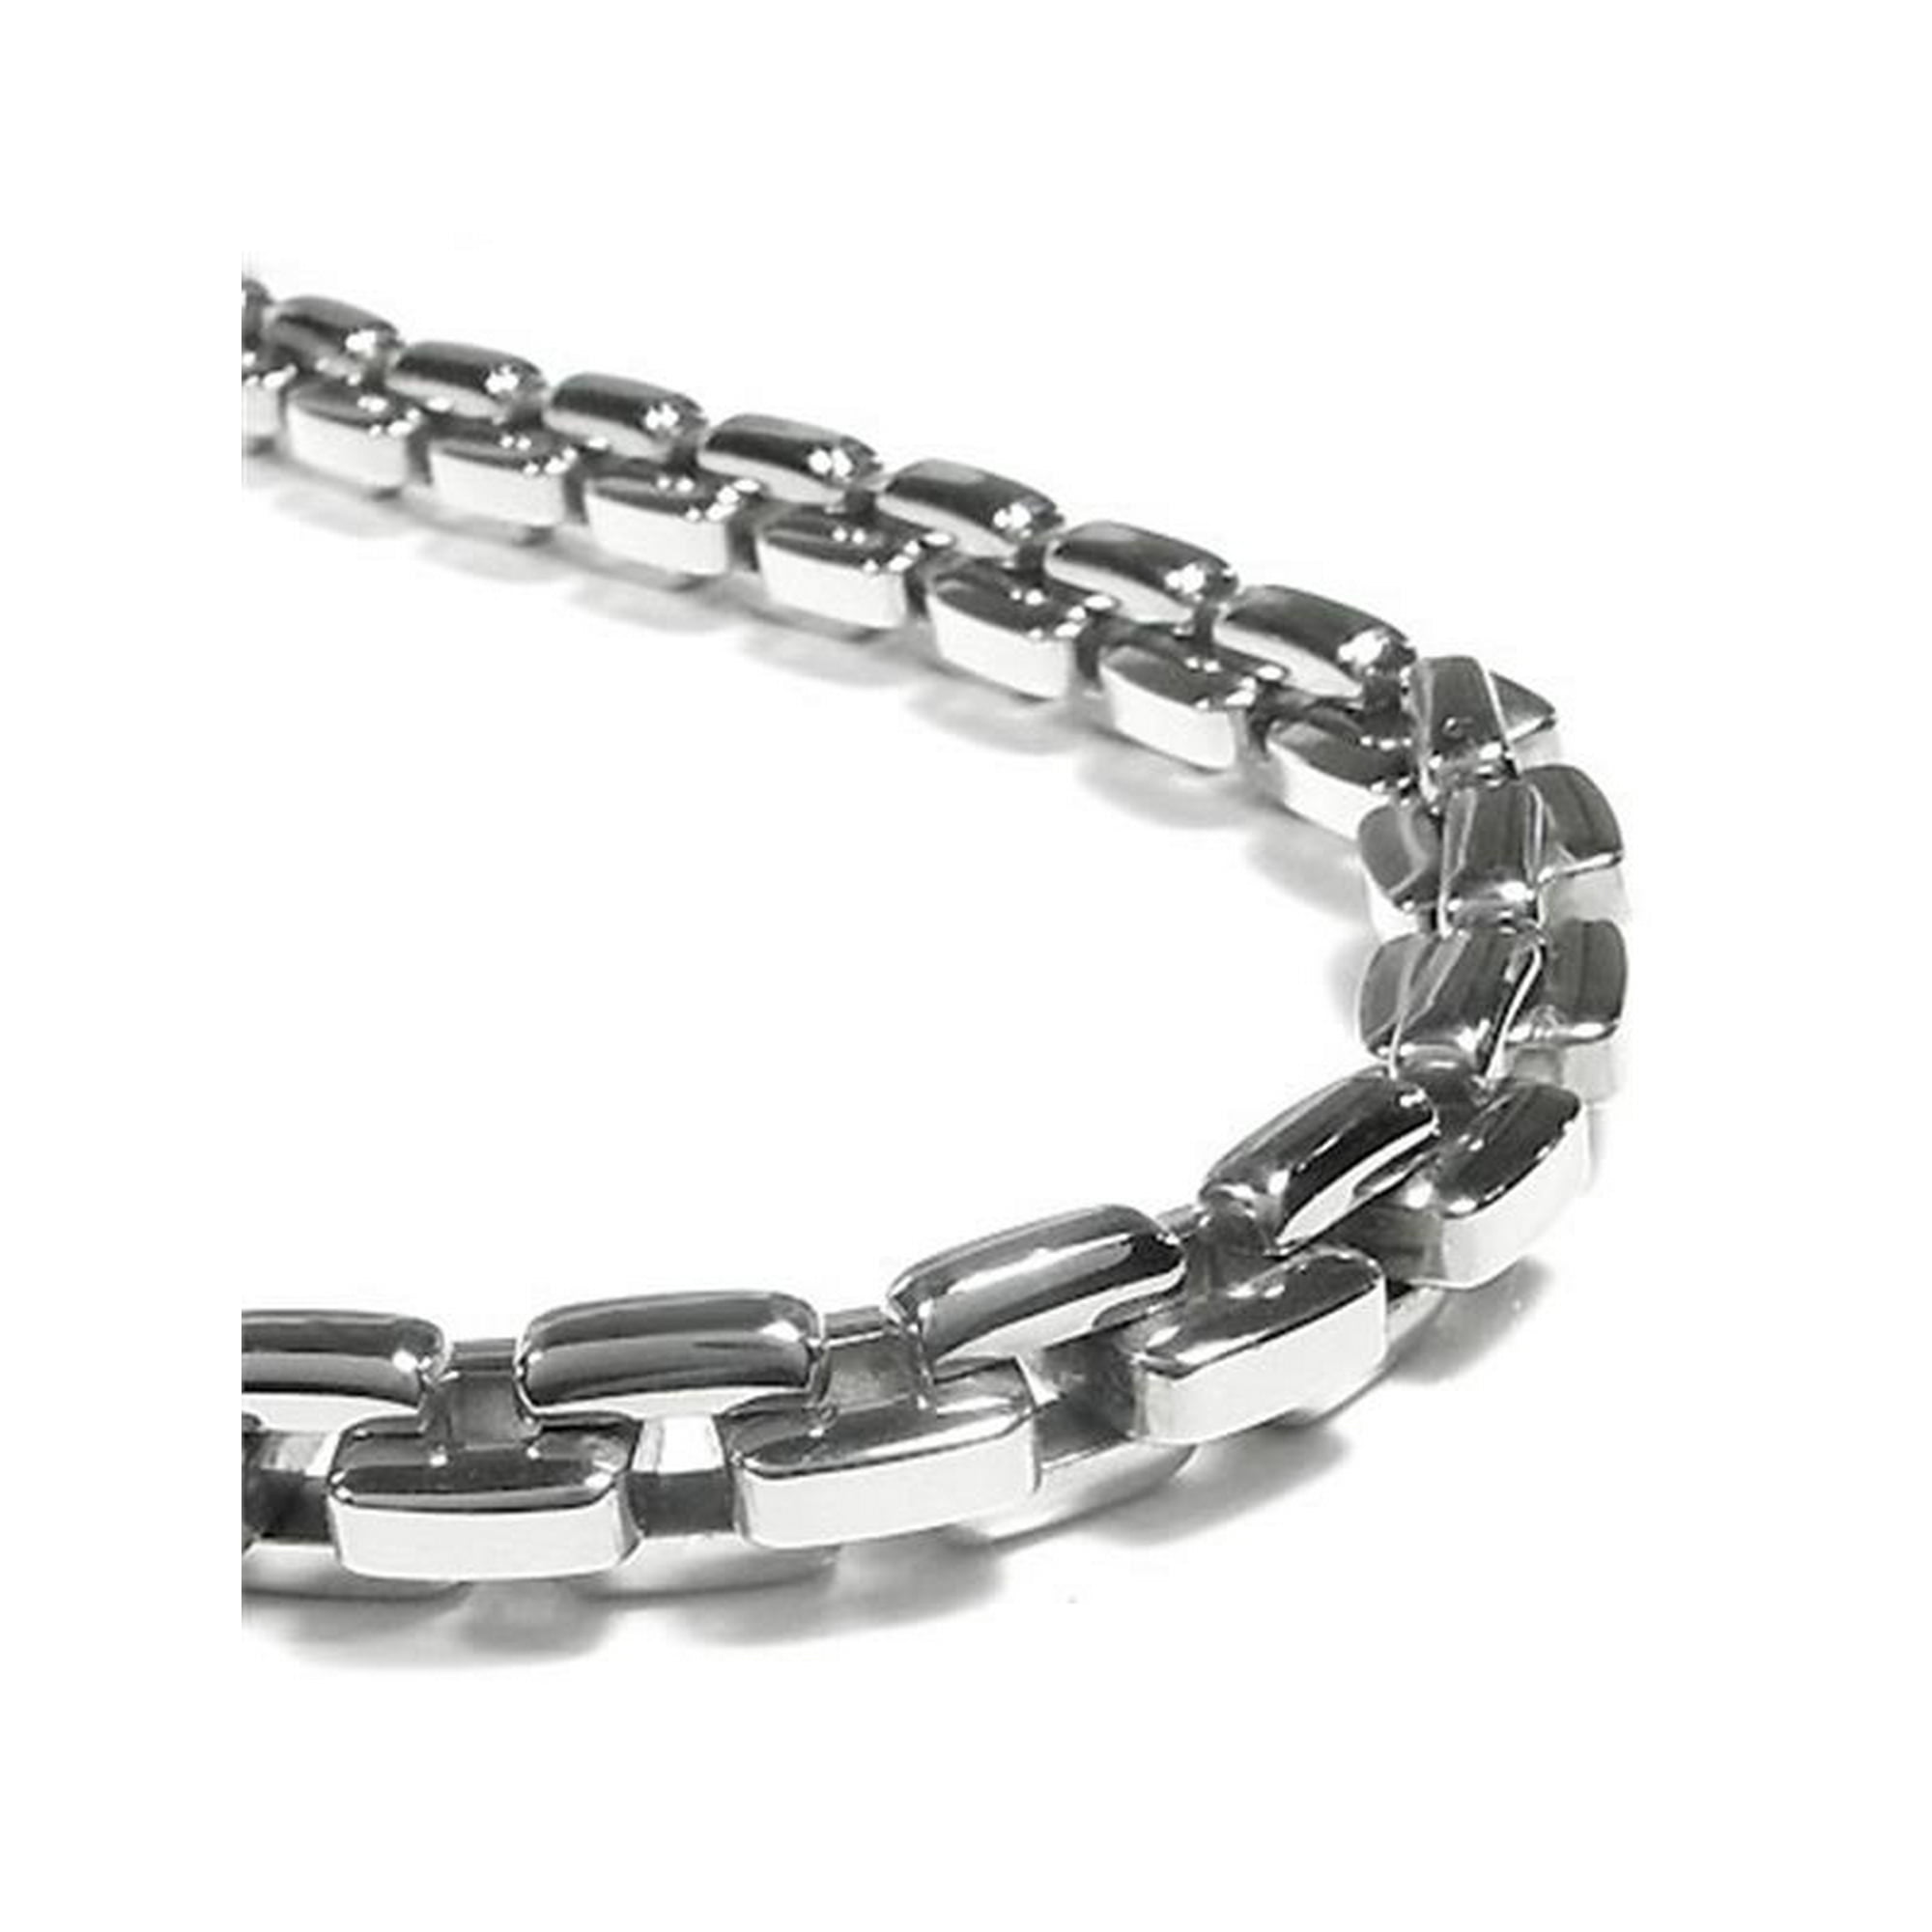 Chain Links Necklace in Black Titanium